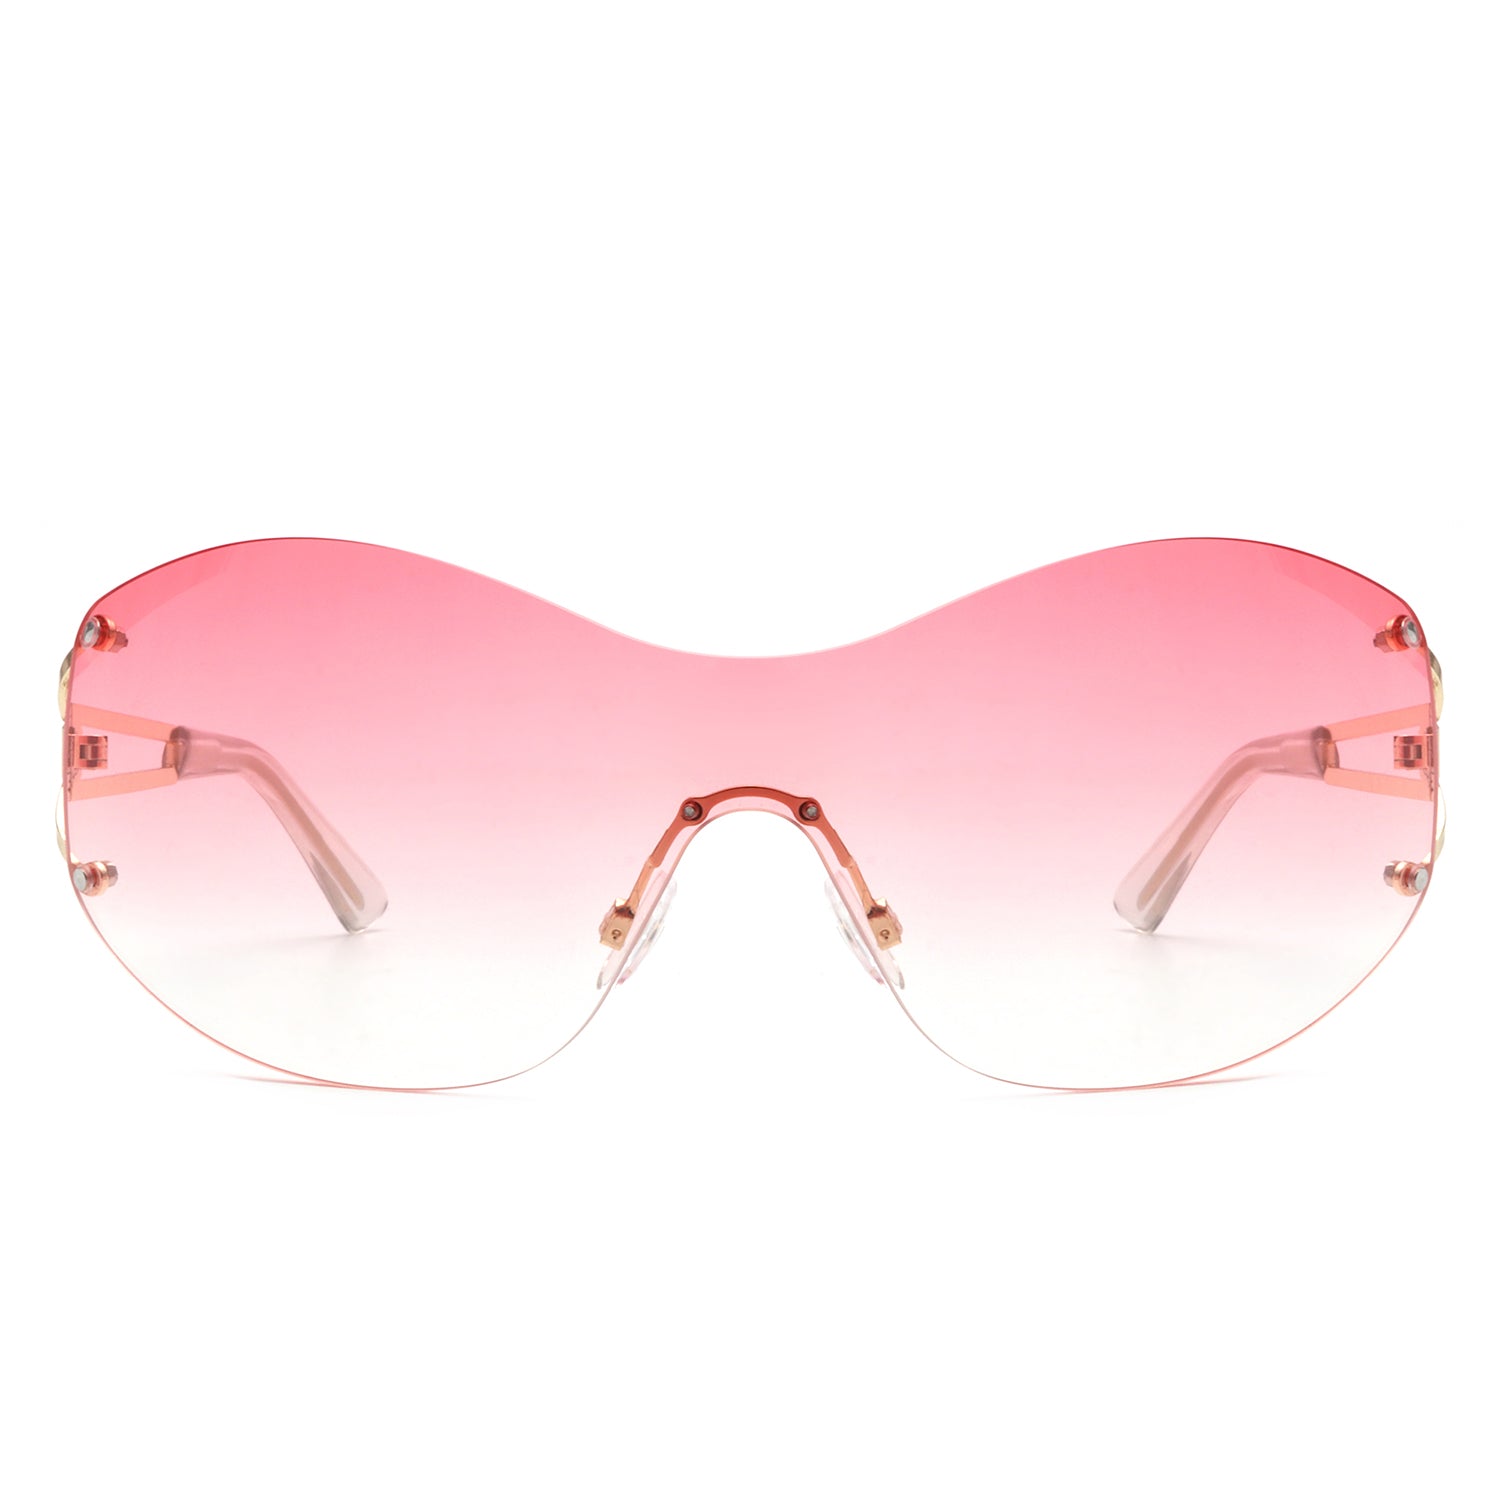 Elandor - Women Rimless Oversize Sleek Oval Fashion Sunglasses Clear